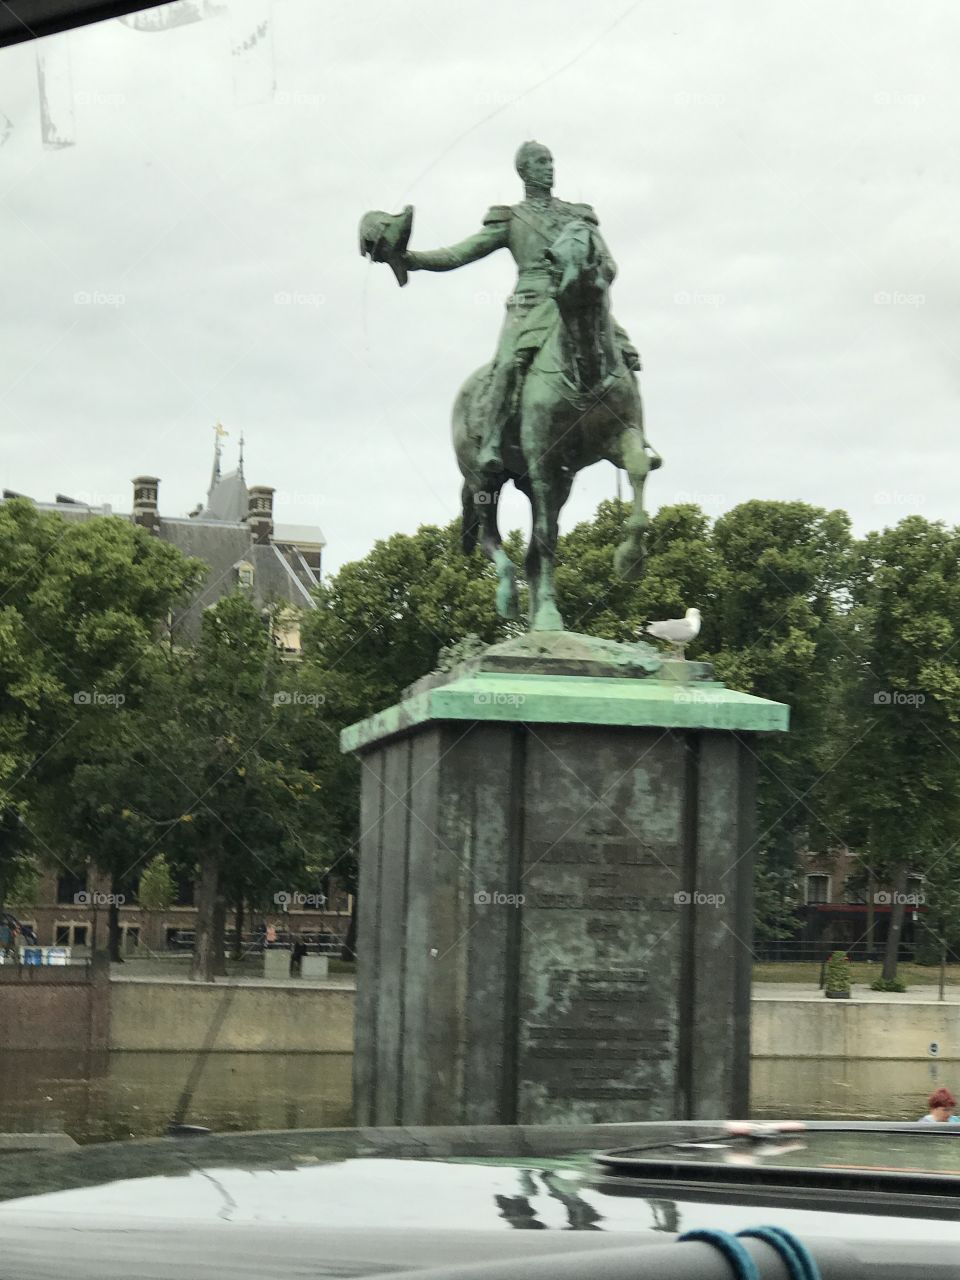 Netherlands 
Statue
Horse
Tour
City
